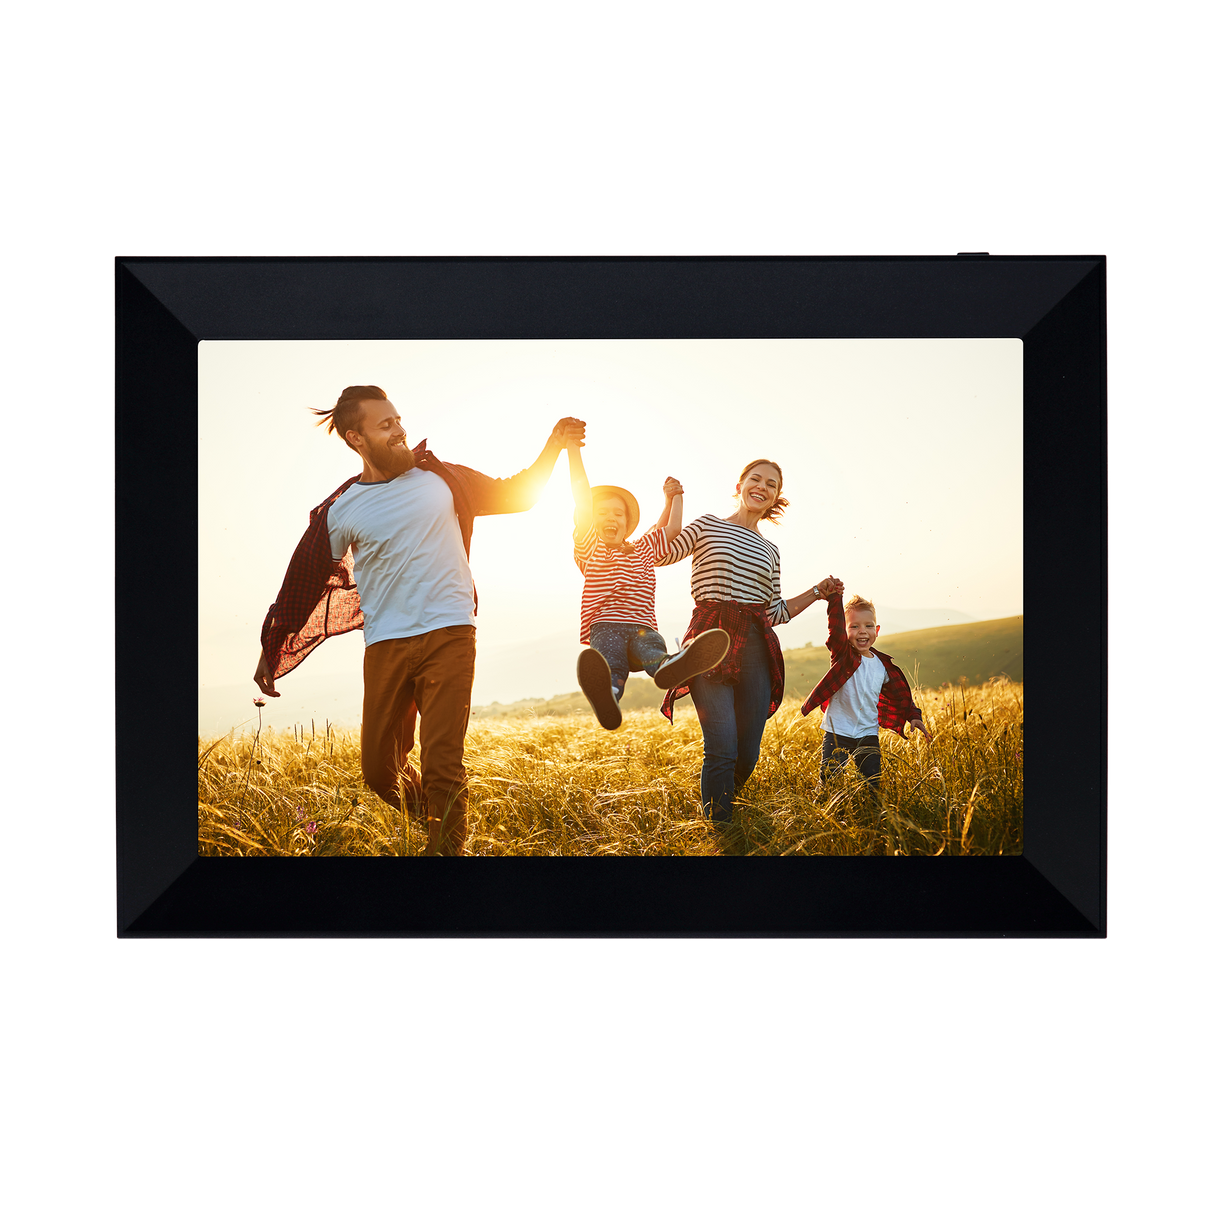 Smart frame wifi 103 - digital photo frame